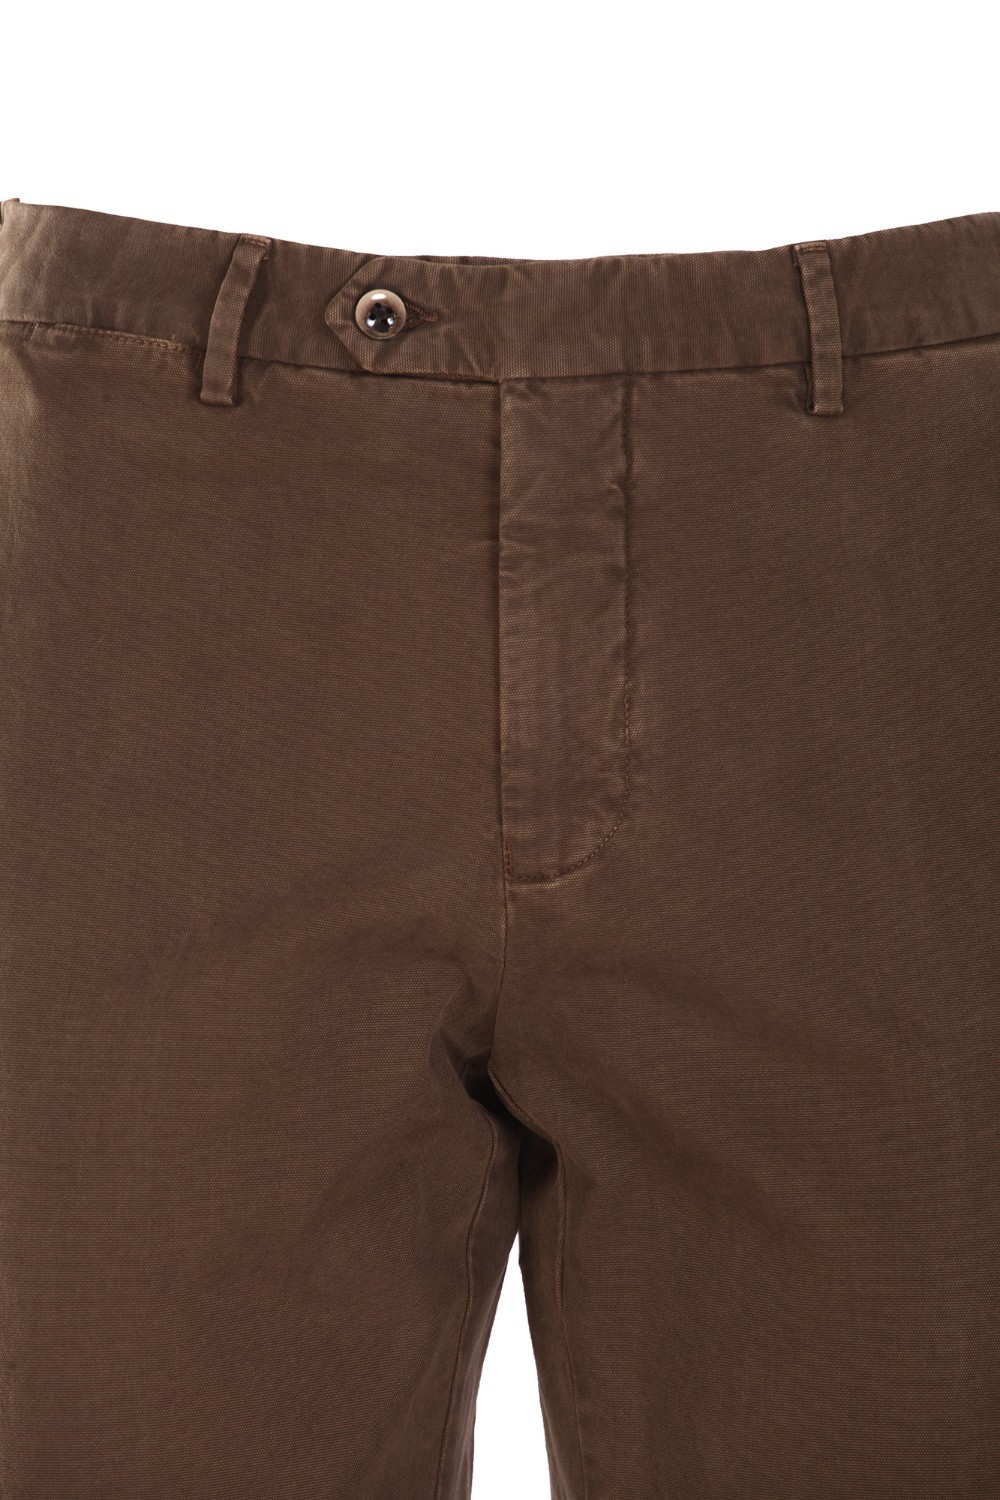 shop GERMANO Saldi Pantalone: Germano pantalone in cotone.
Drop 6.
Chiusura con zip e bottone sovrapposto.
Regular fit.
Composizione: 97% cotone 3% elastan.
Made in Italy.. 524 59J2-436 number 5606782